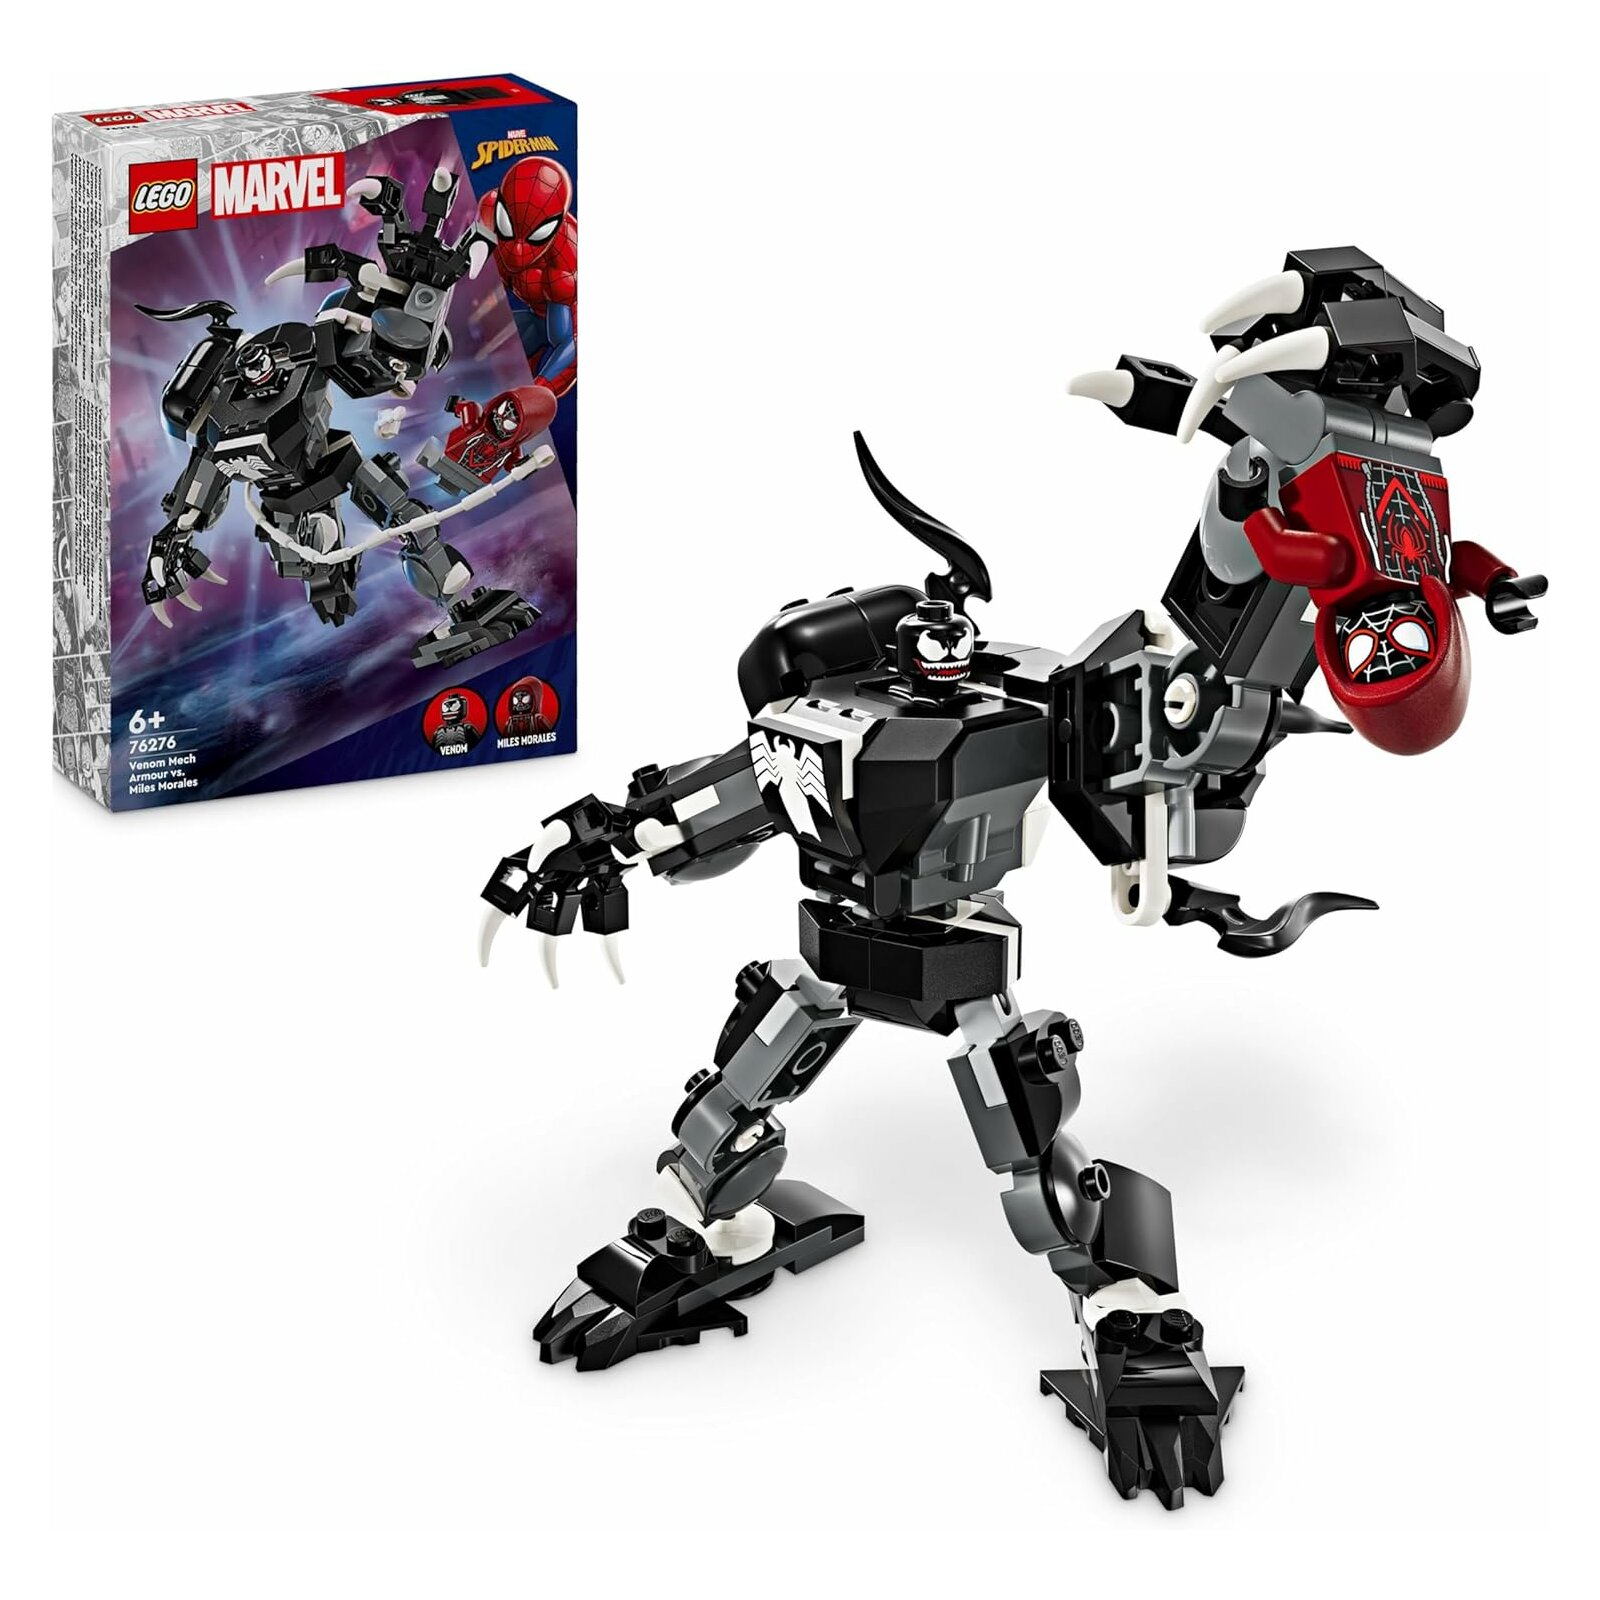 LEGO - Marvel Super Heroes - 76276 Venom Mech vs. Miles Morales